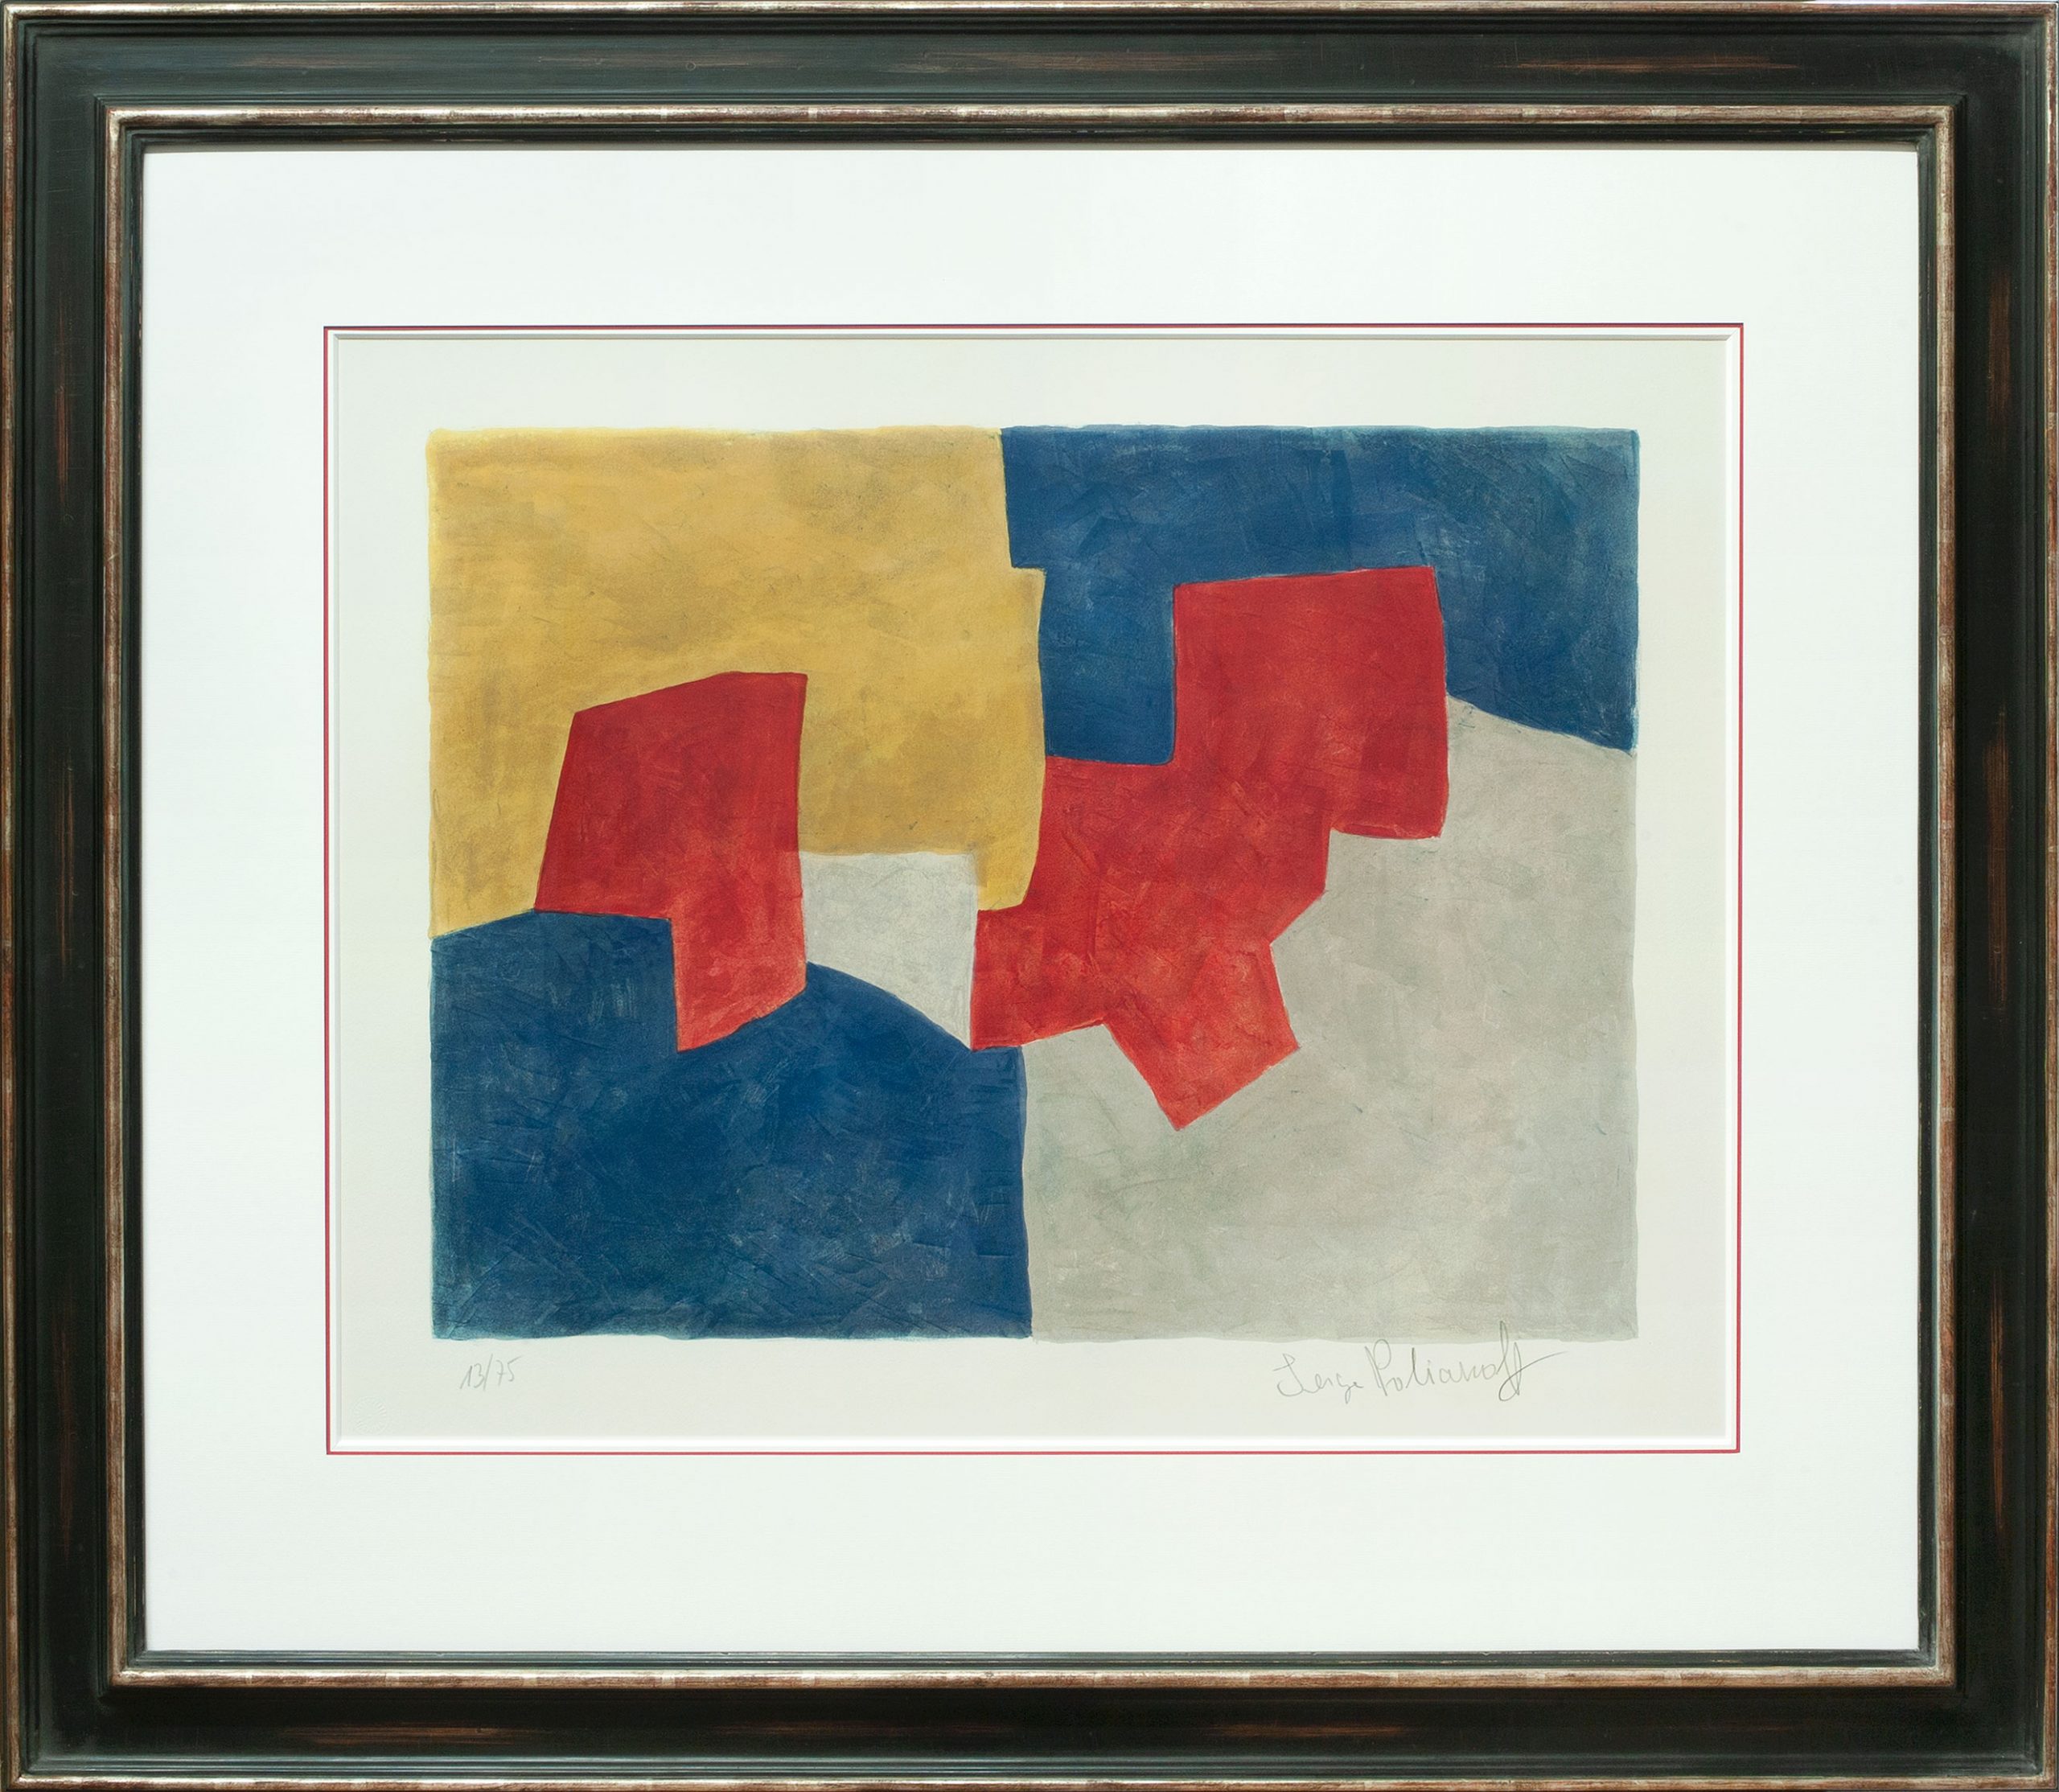 Serge Poliakoff, Composition bleue-grise-rouge-jaune, Galerie Française